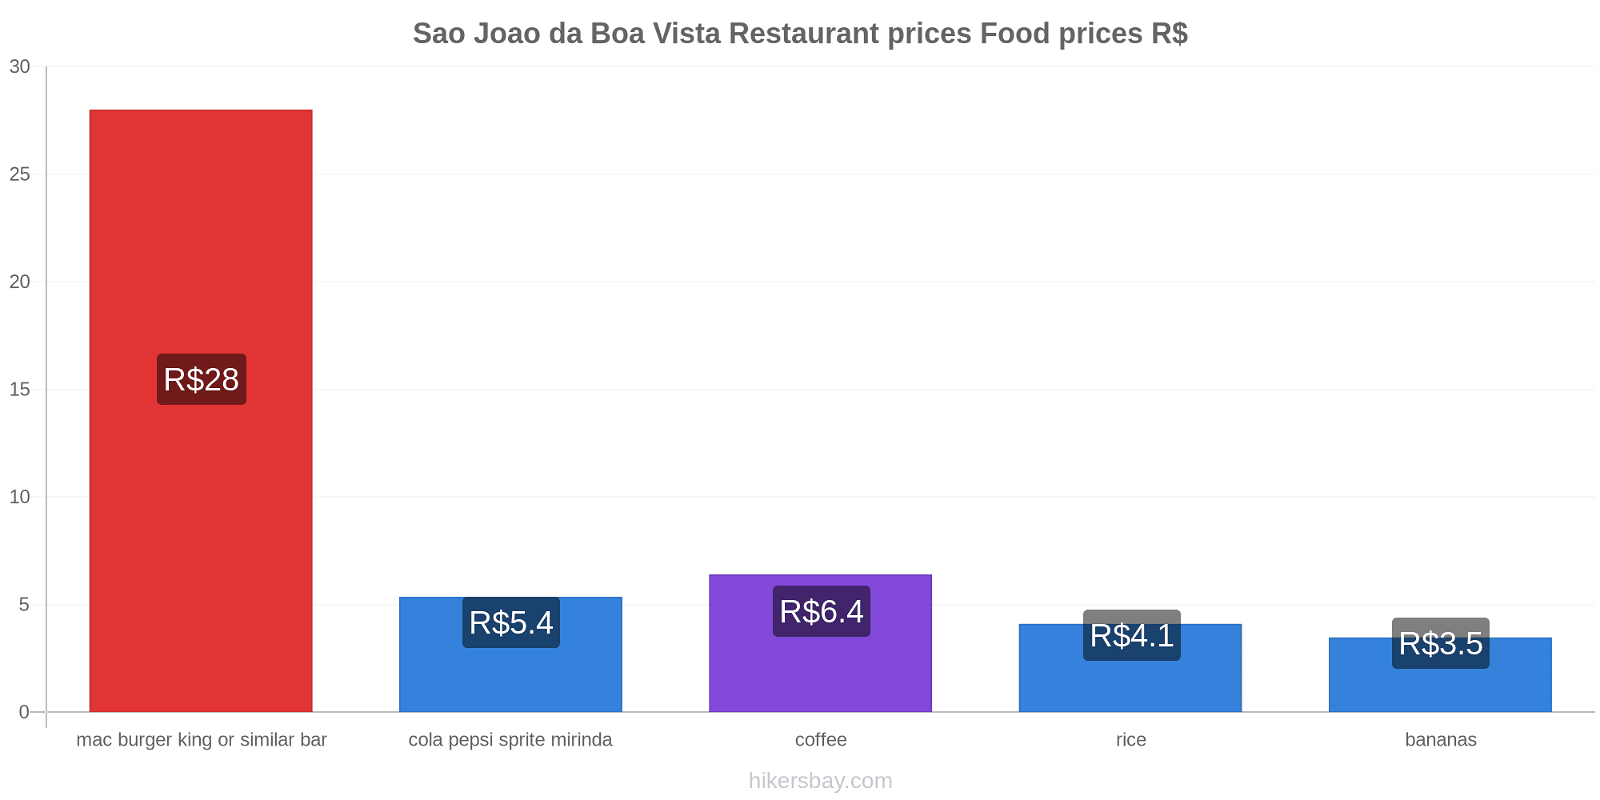 Sao Joao da Boa Vista price changes hikersbay.com